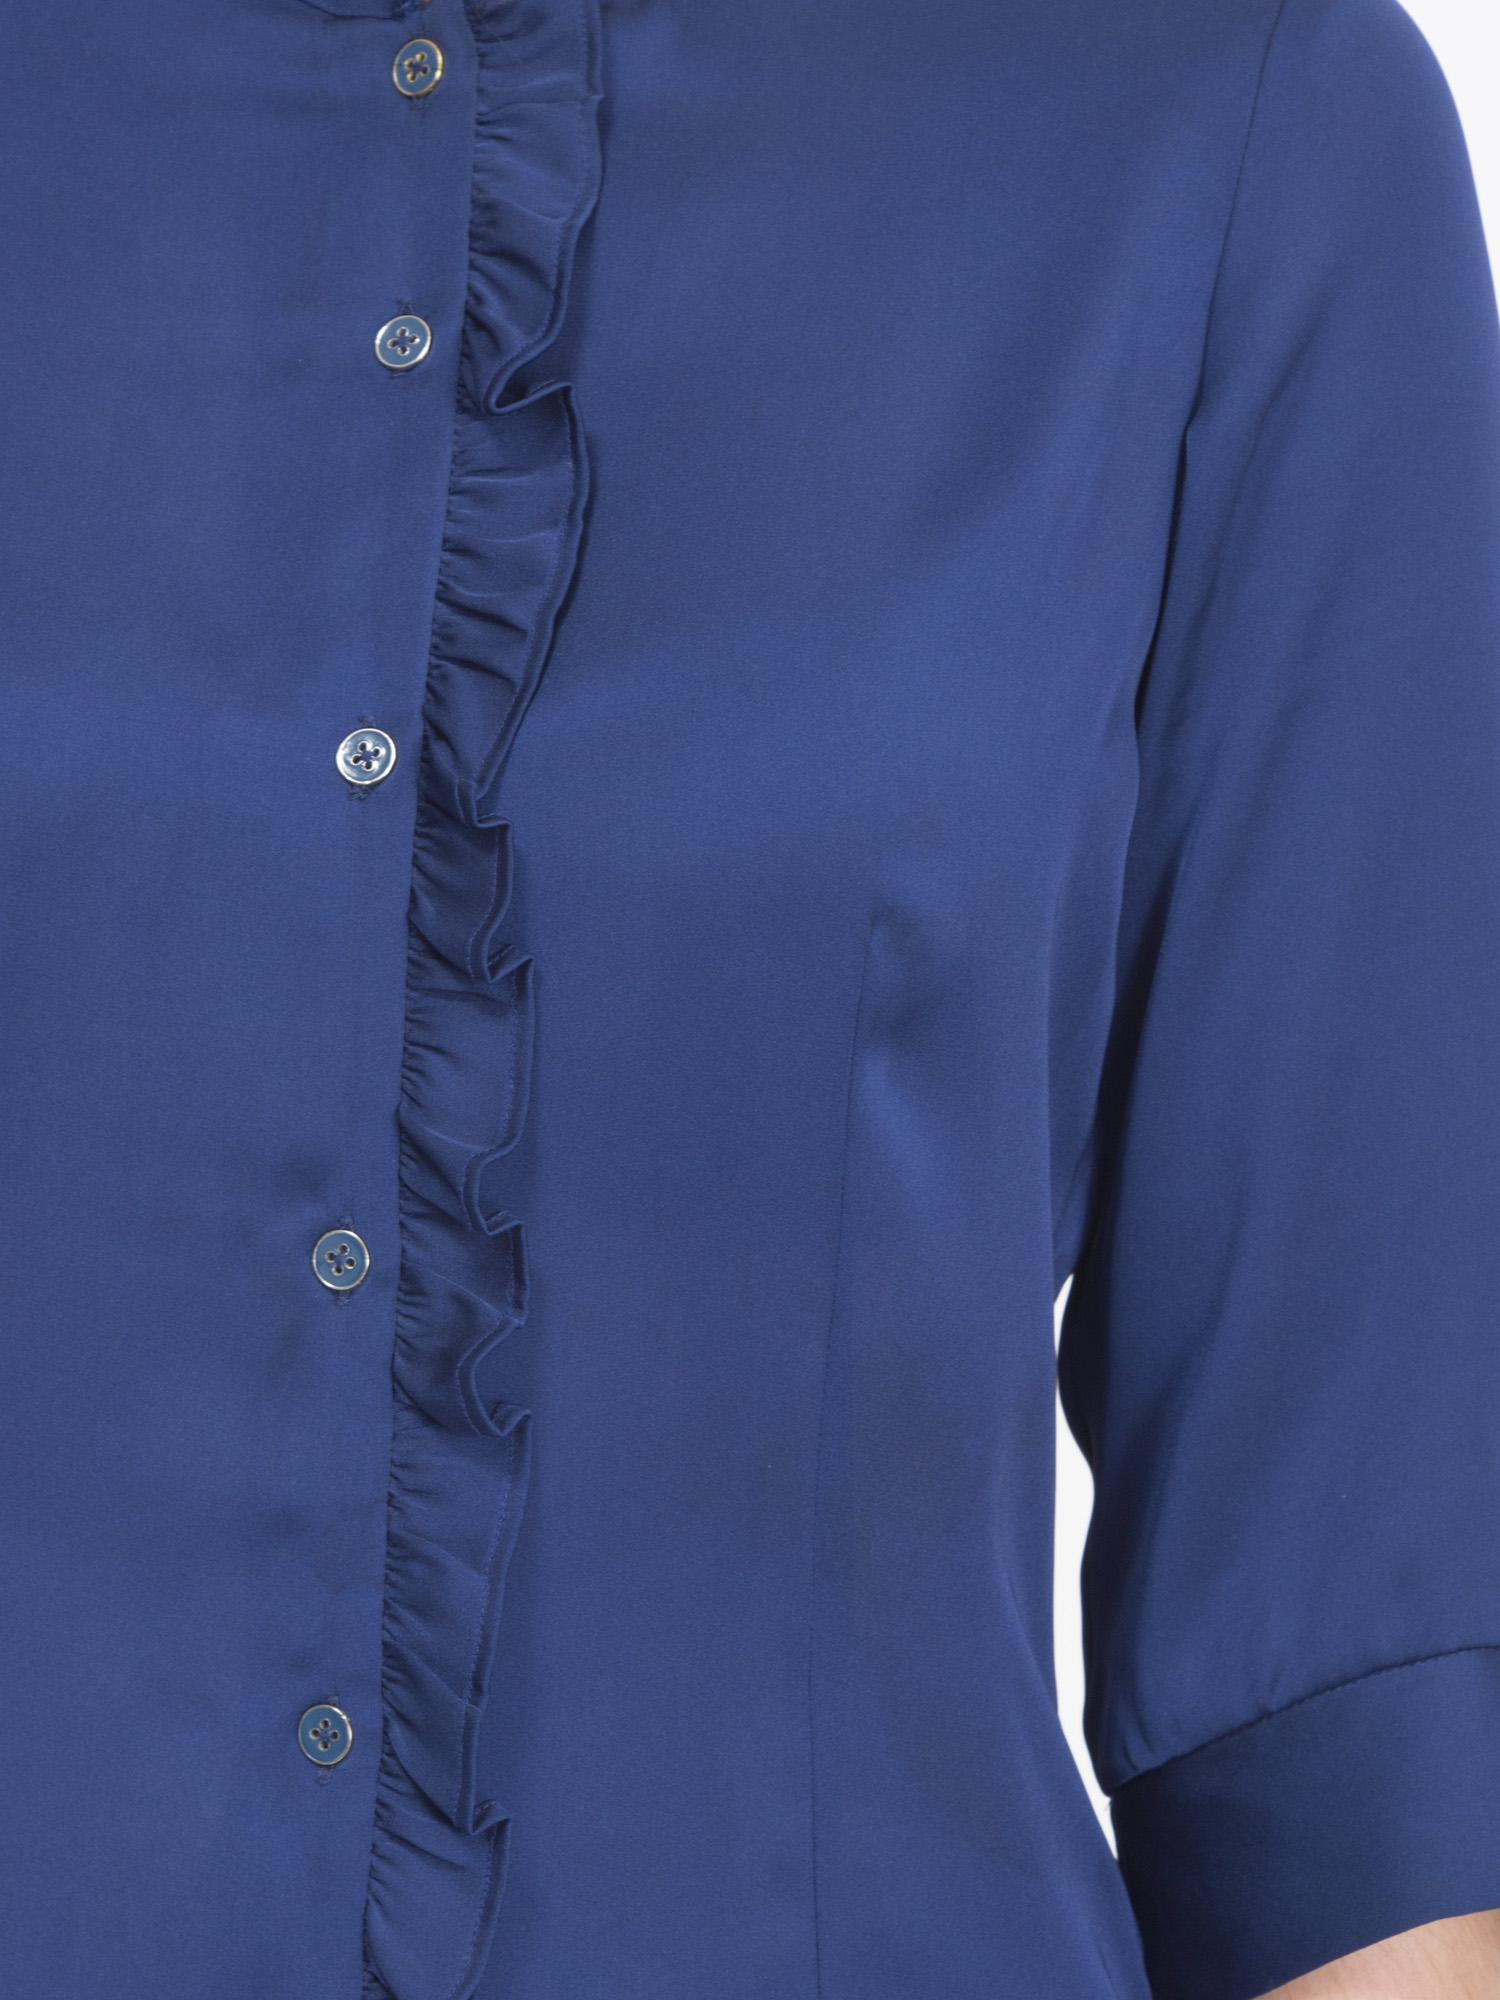 Blue Placket Ruffle Shirt -4